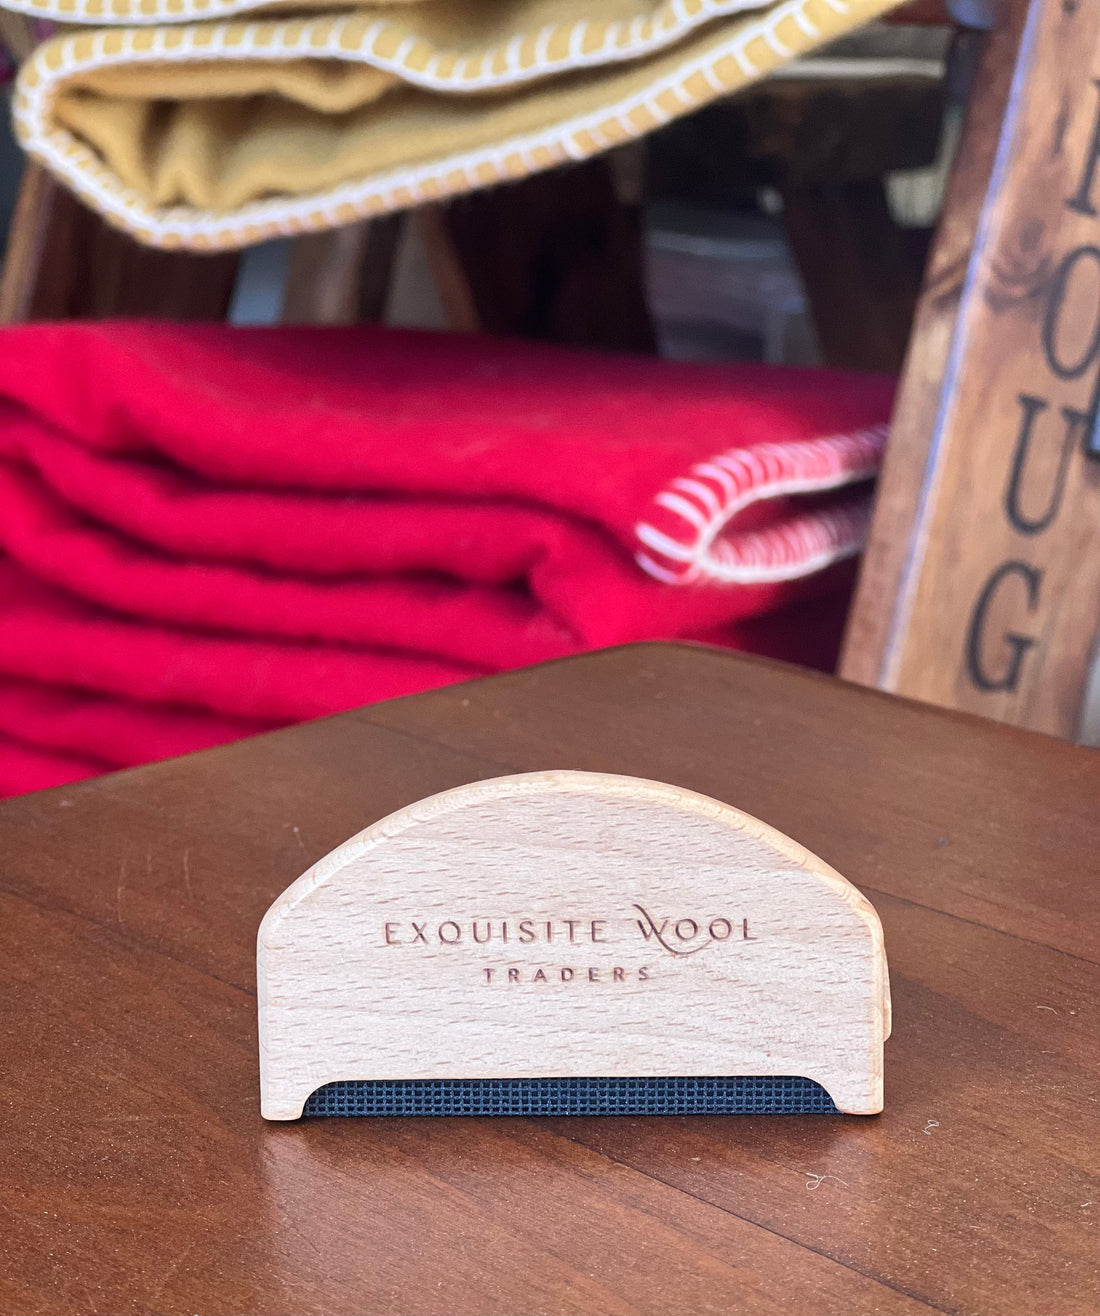 Wooden Wool Comb